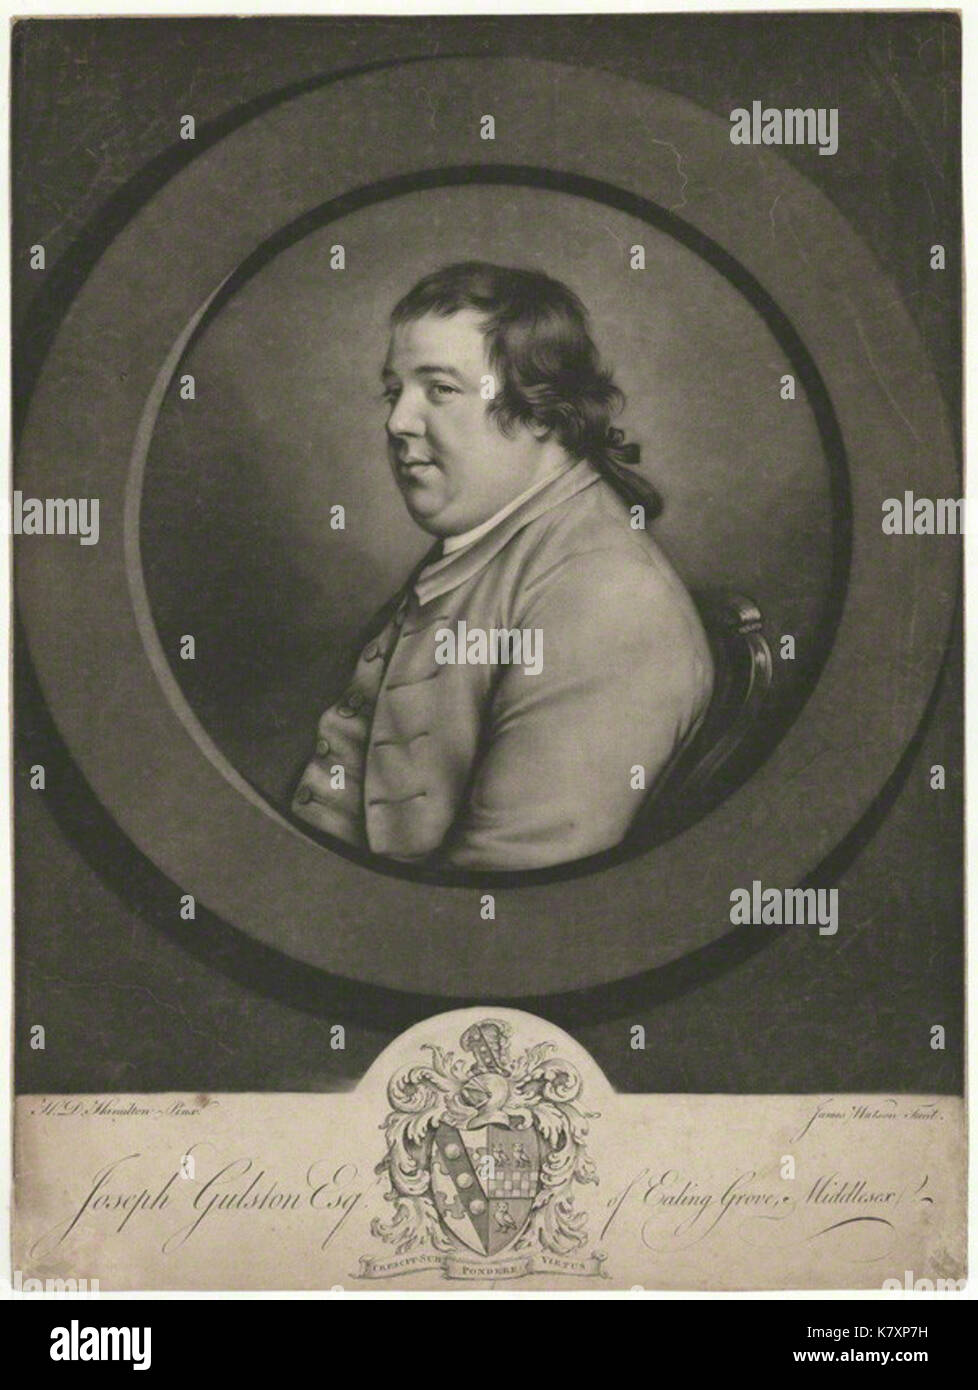 Joseph Gulston (1745 1786) by J. Watson, after H.D. Hamilton (c. 1776) Stock Photo